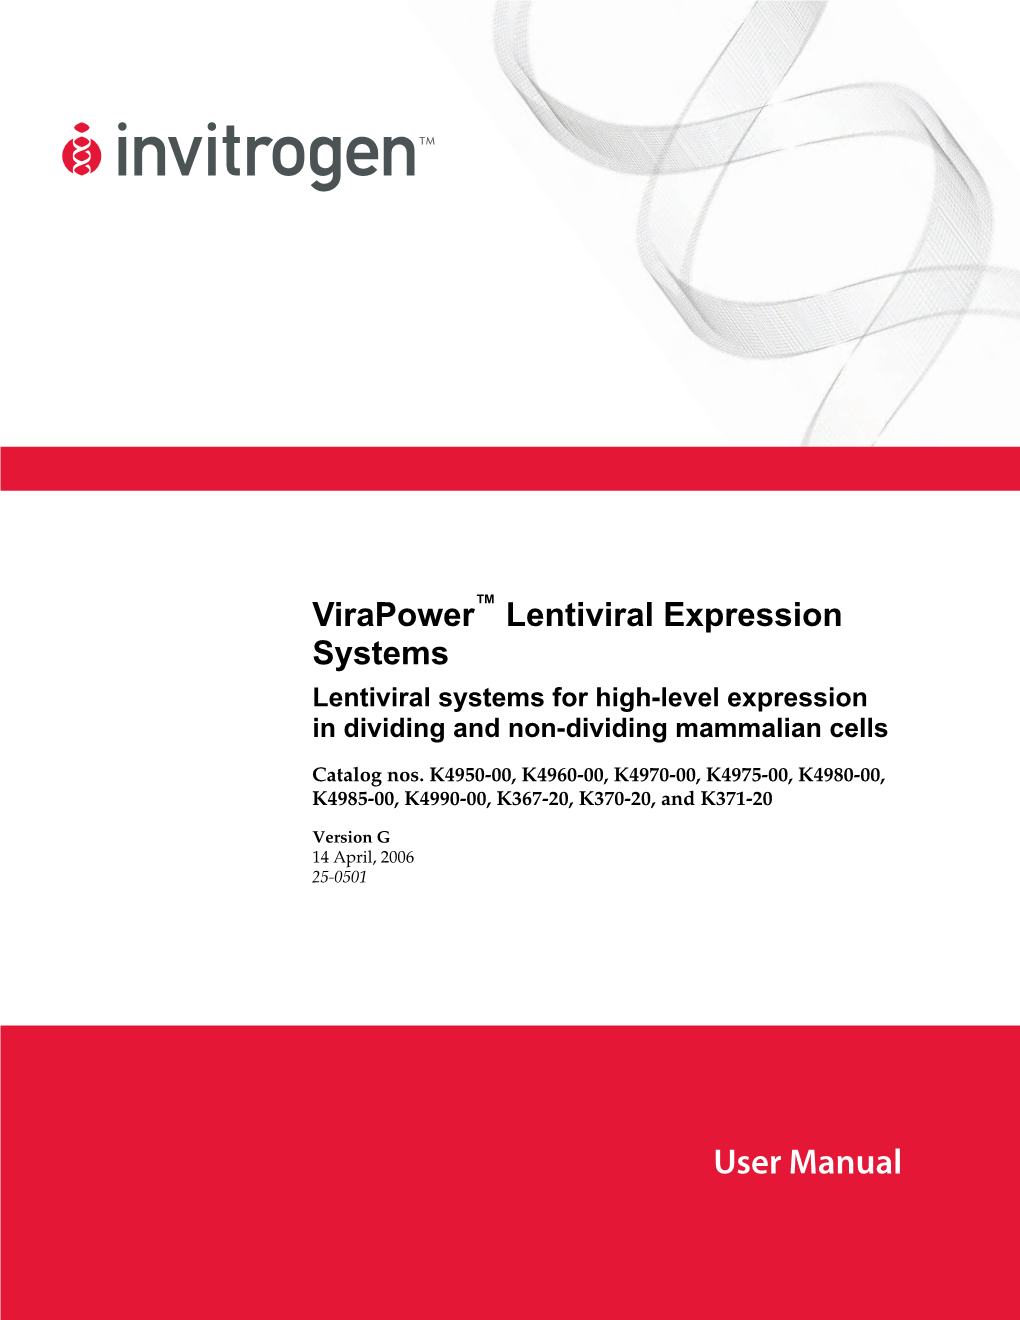 Virapower™ Lentiviral Expression Systems Lentiviral Systems for High-Level Expression in Dividing and Non-Dividing Mammalian Cells